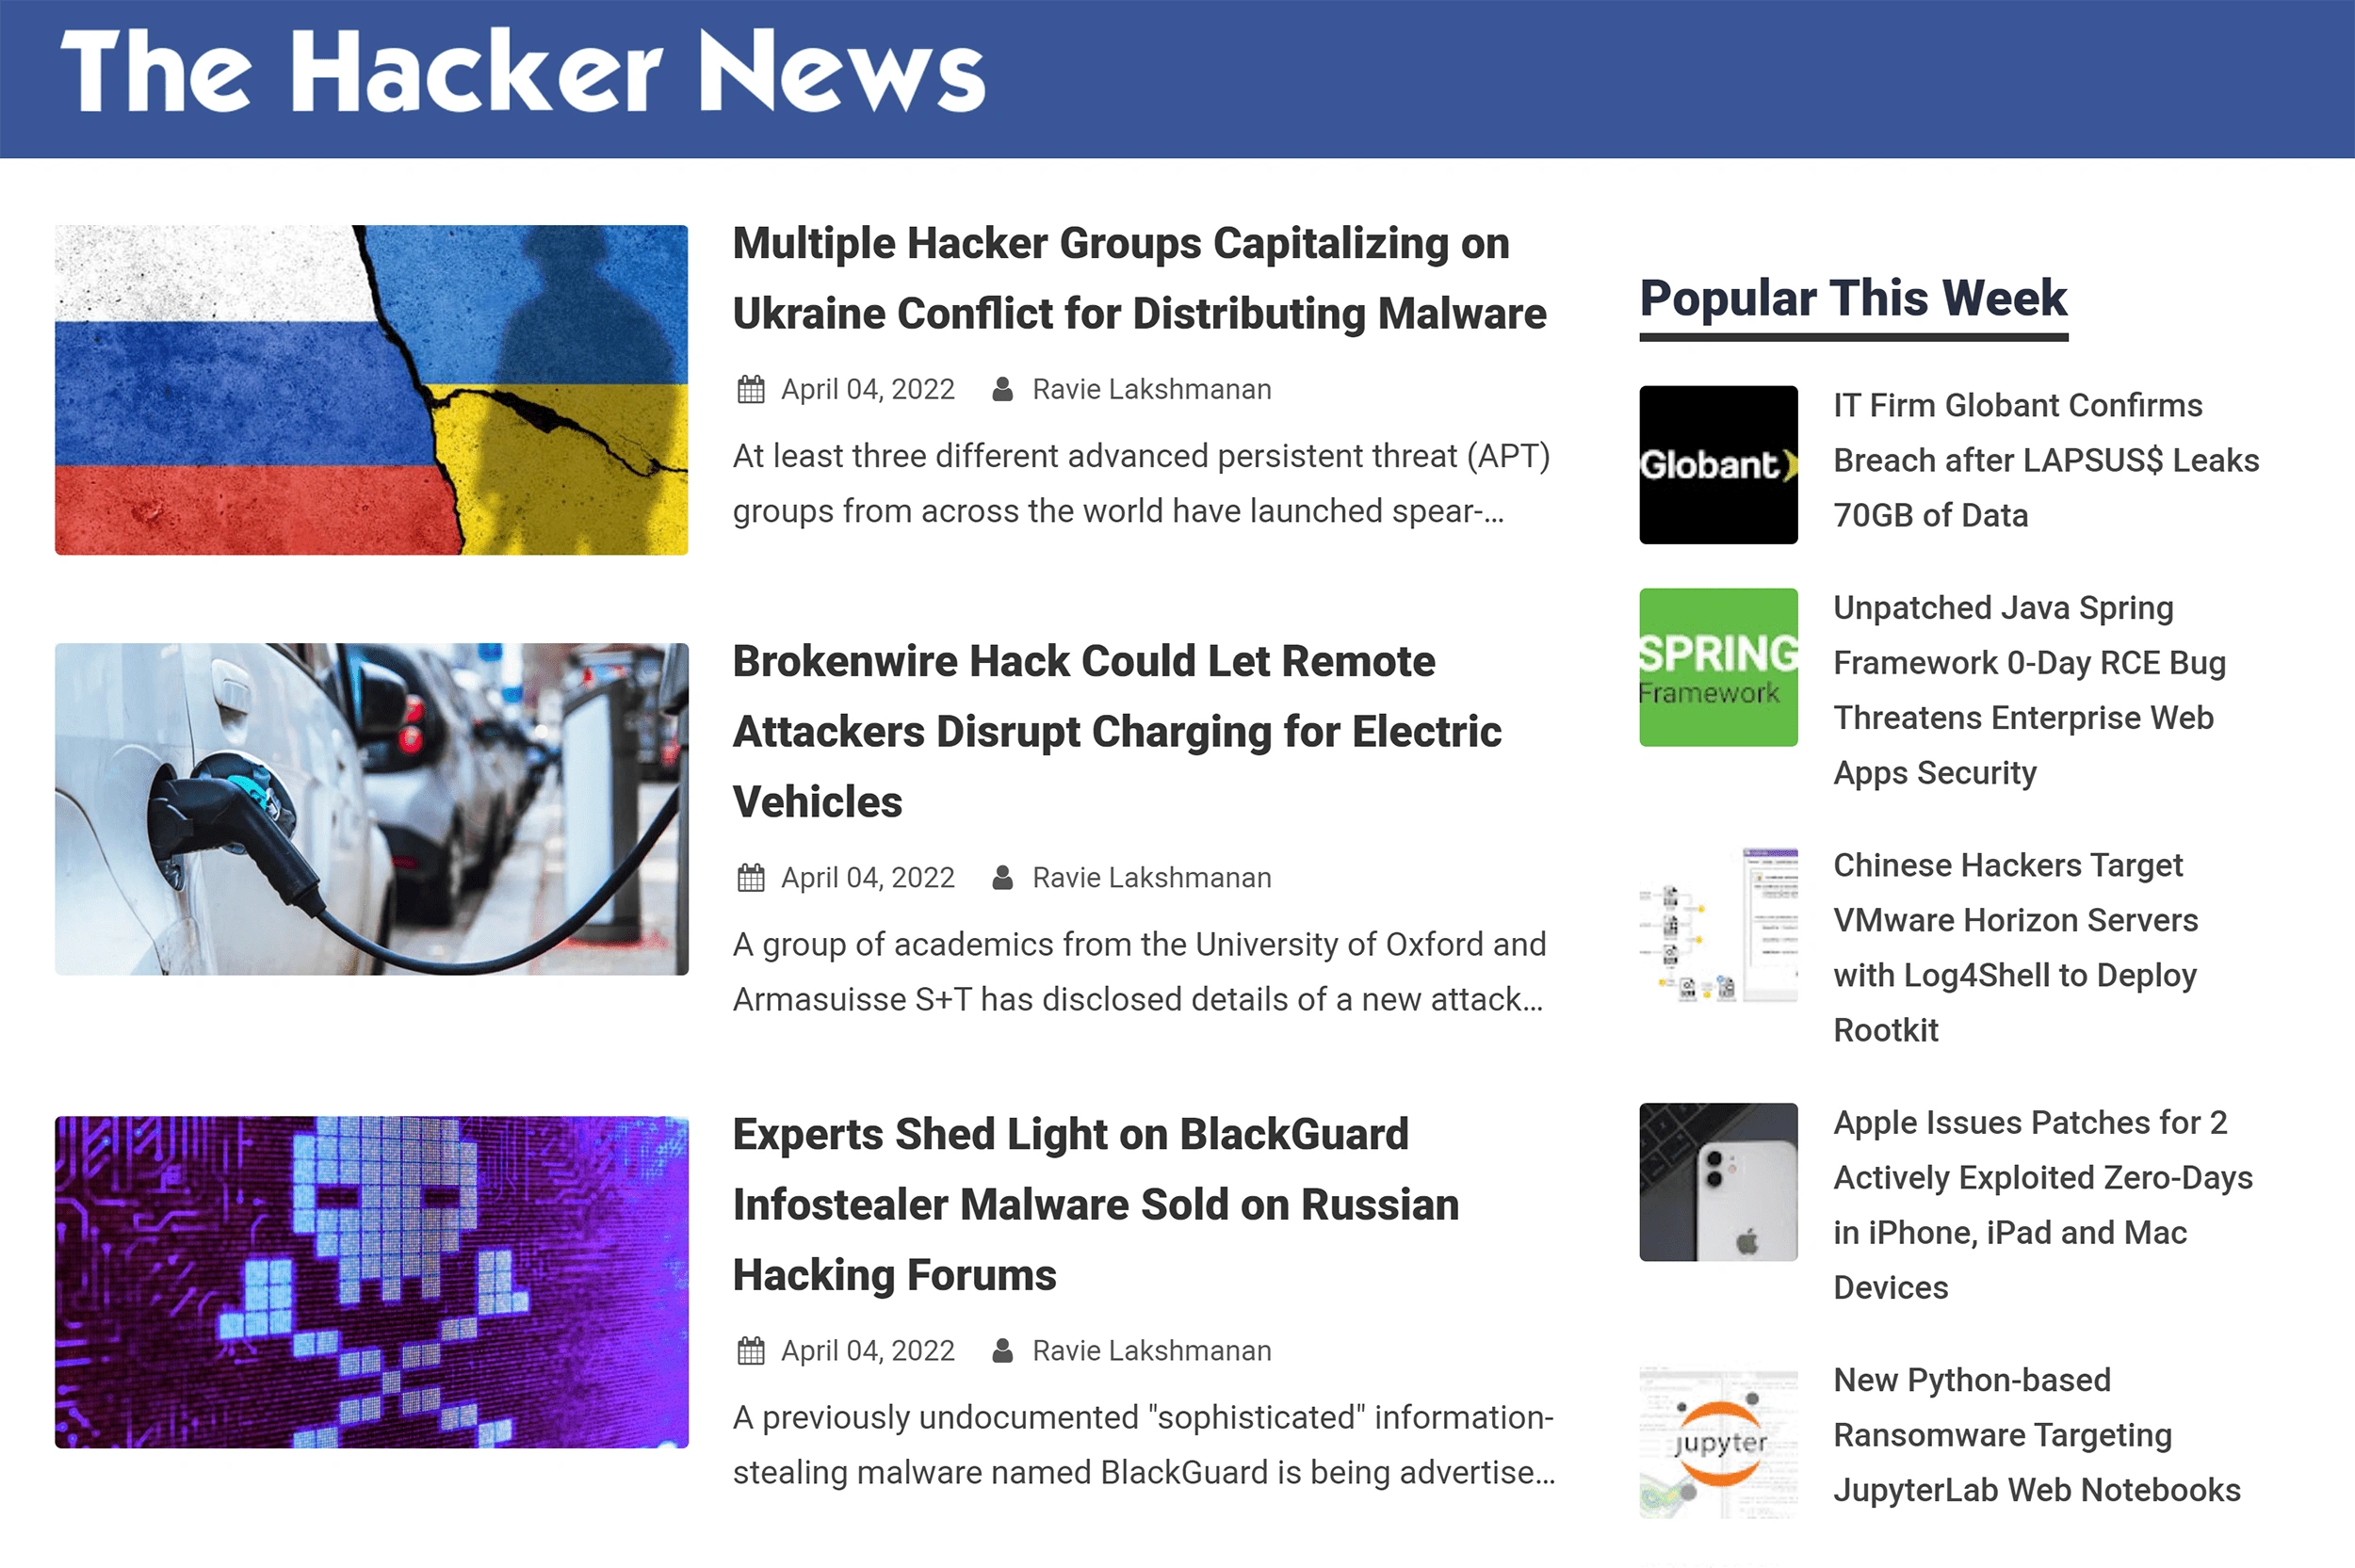 thehackernews-min.png